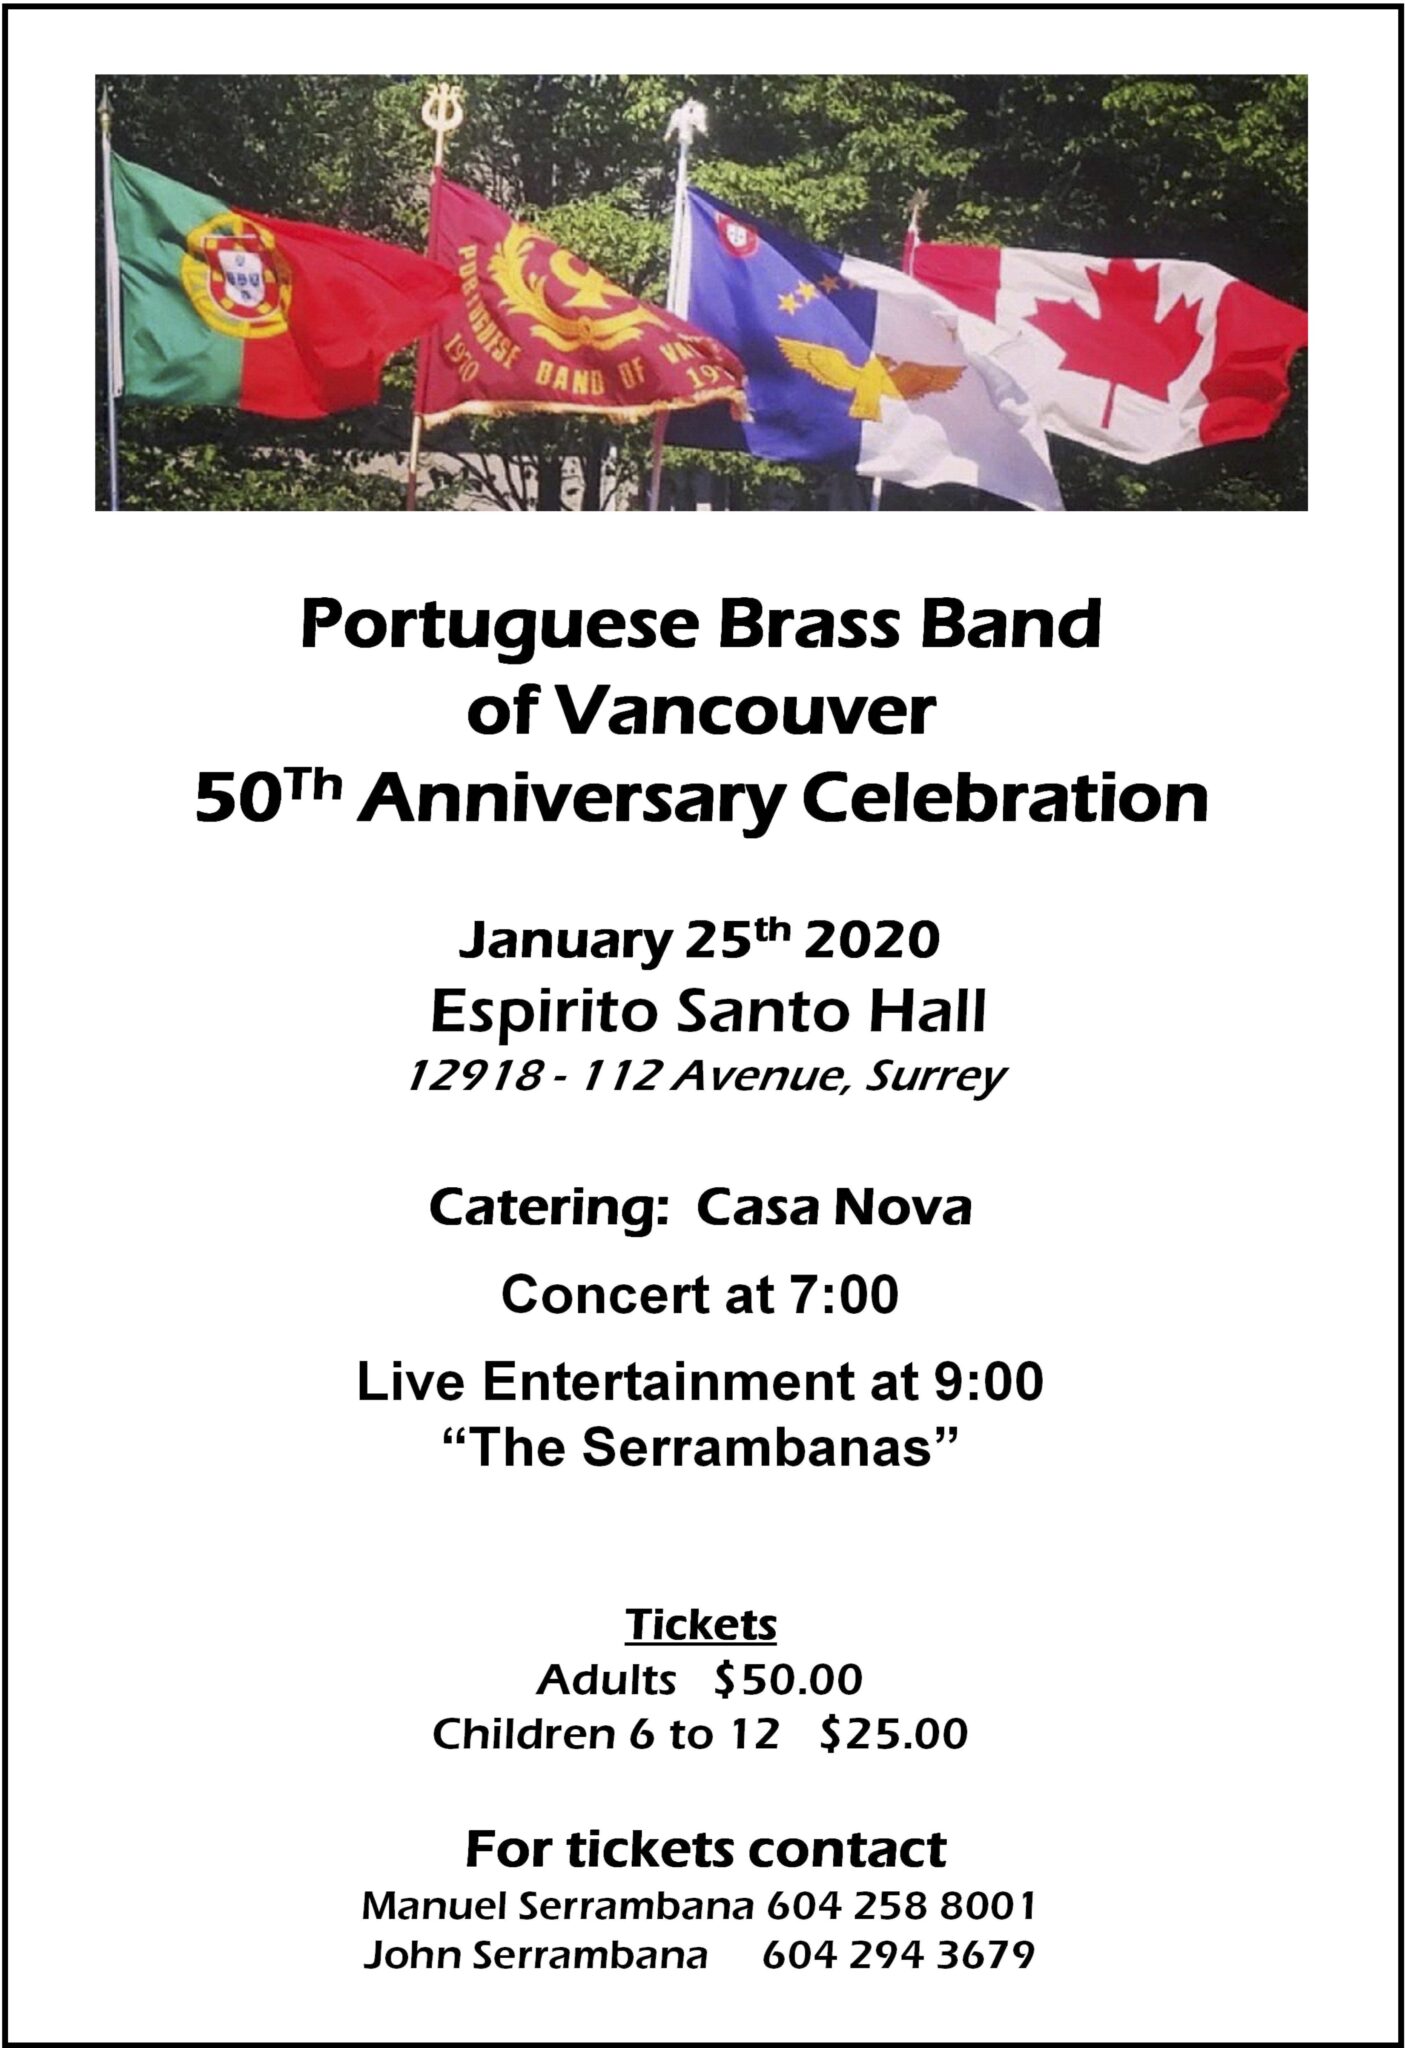 Portuguese Filarmonic Band of Vancouver